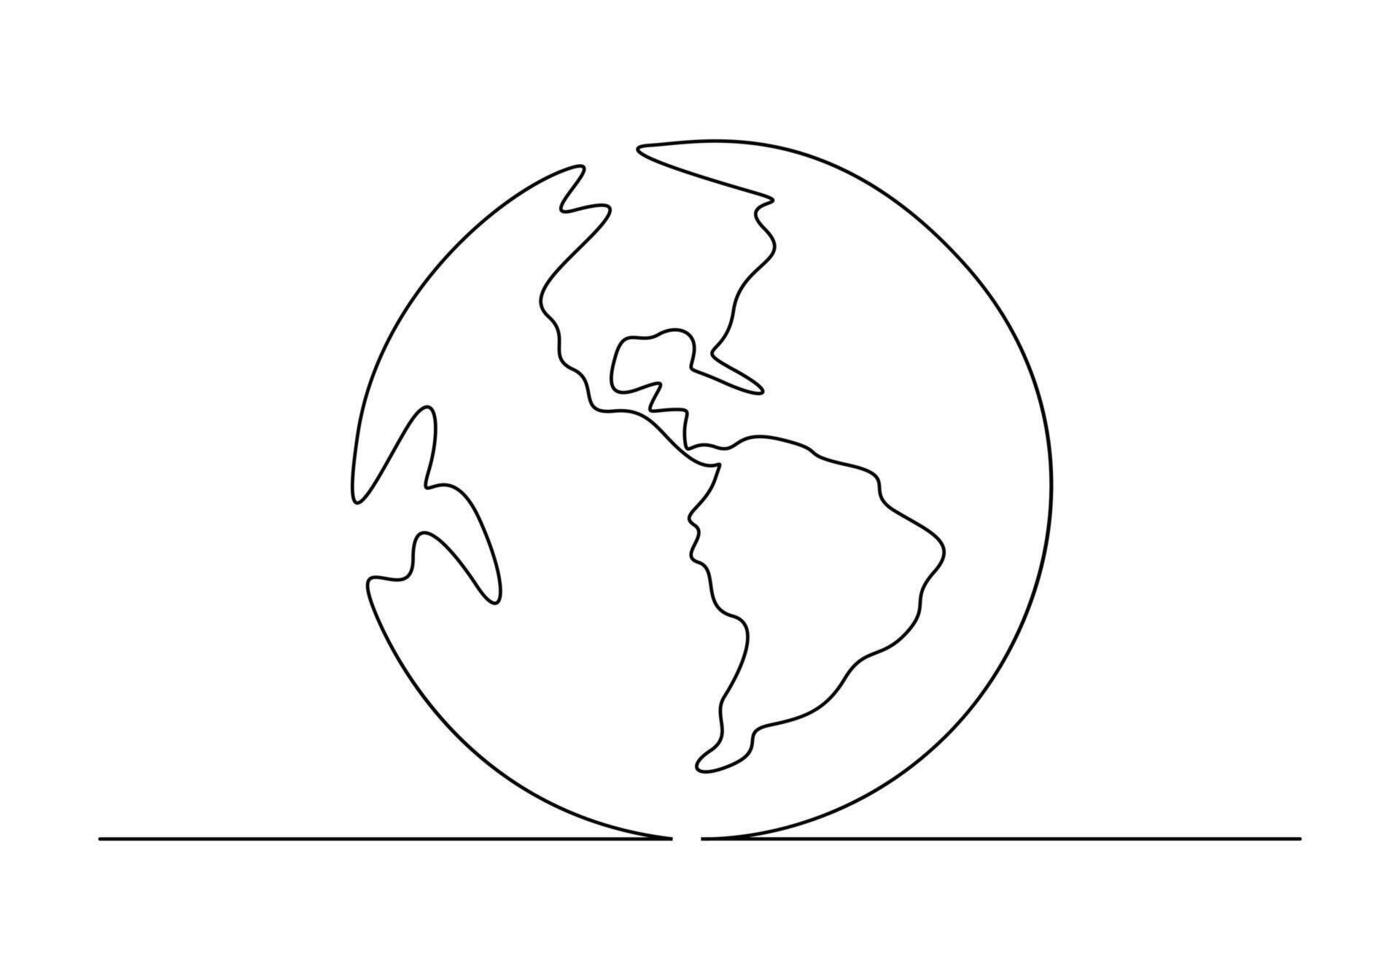 monde carte continu un ligne dessin de Terre globe vecteur illustration